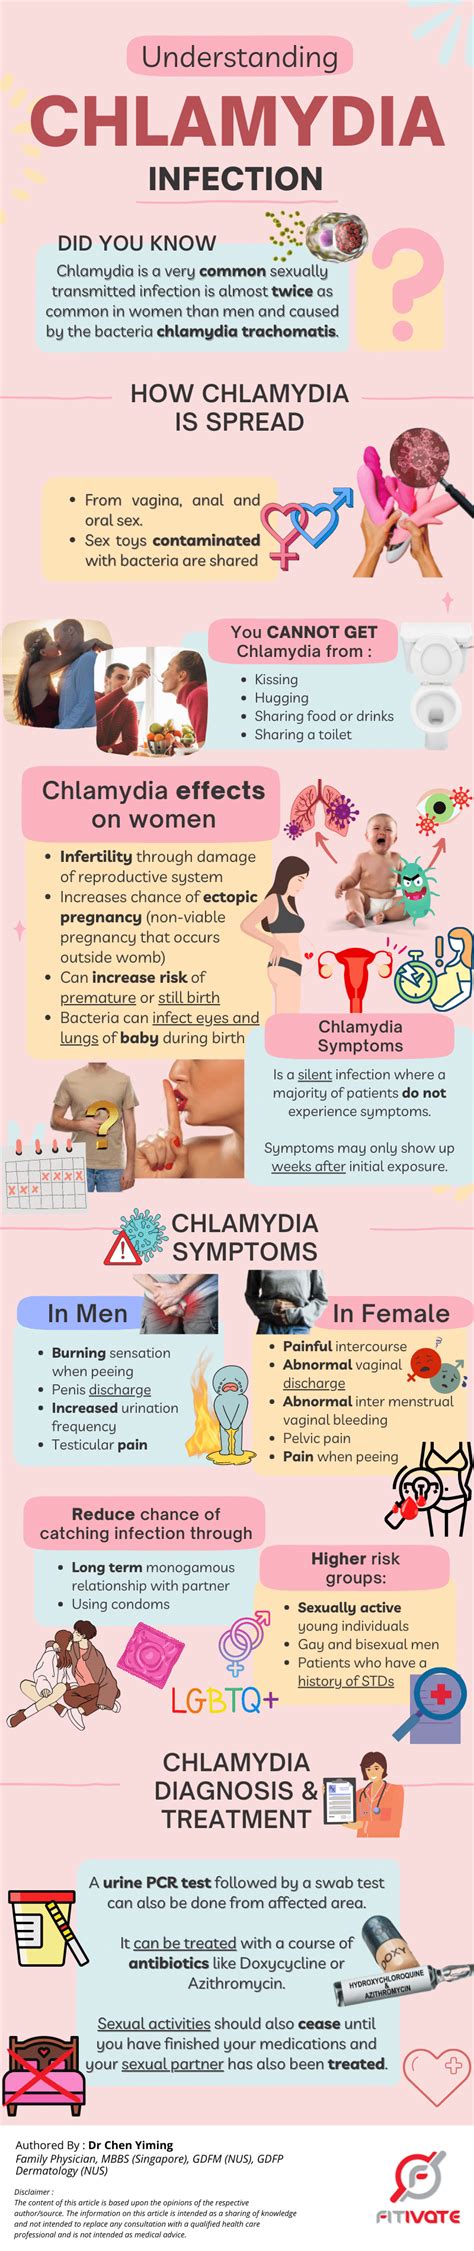 Understanding Chlamydia Infection